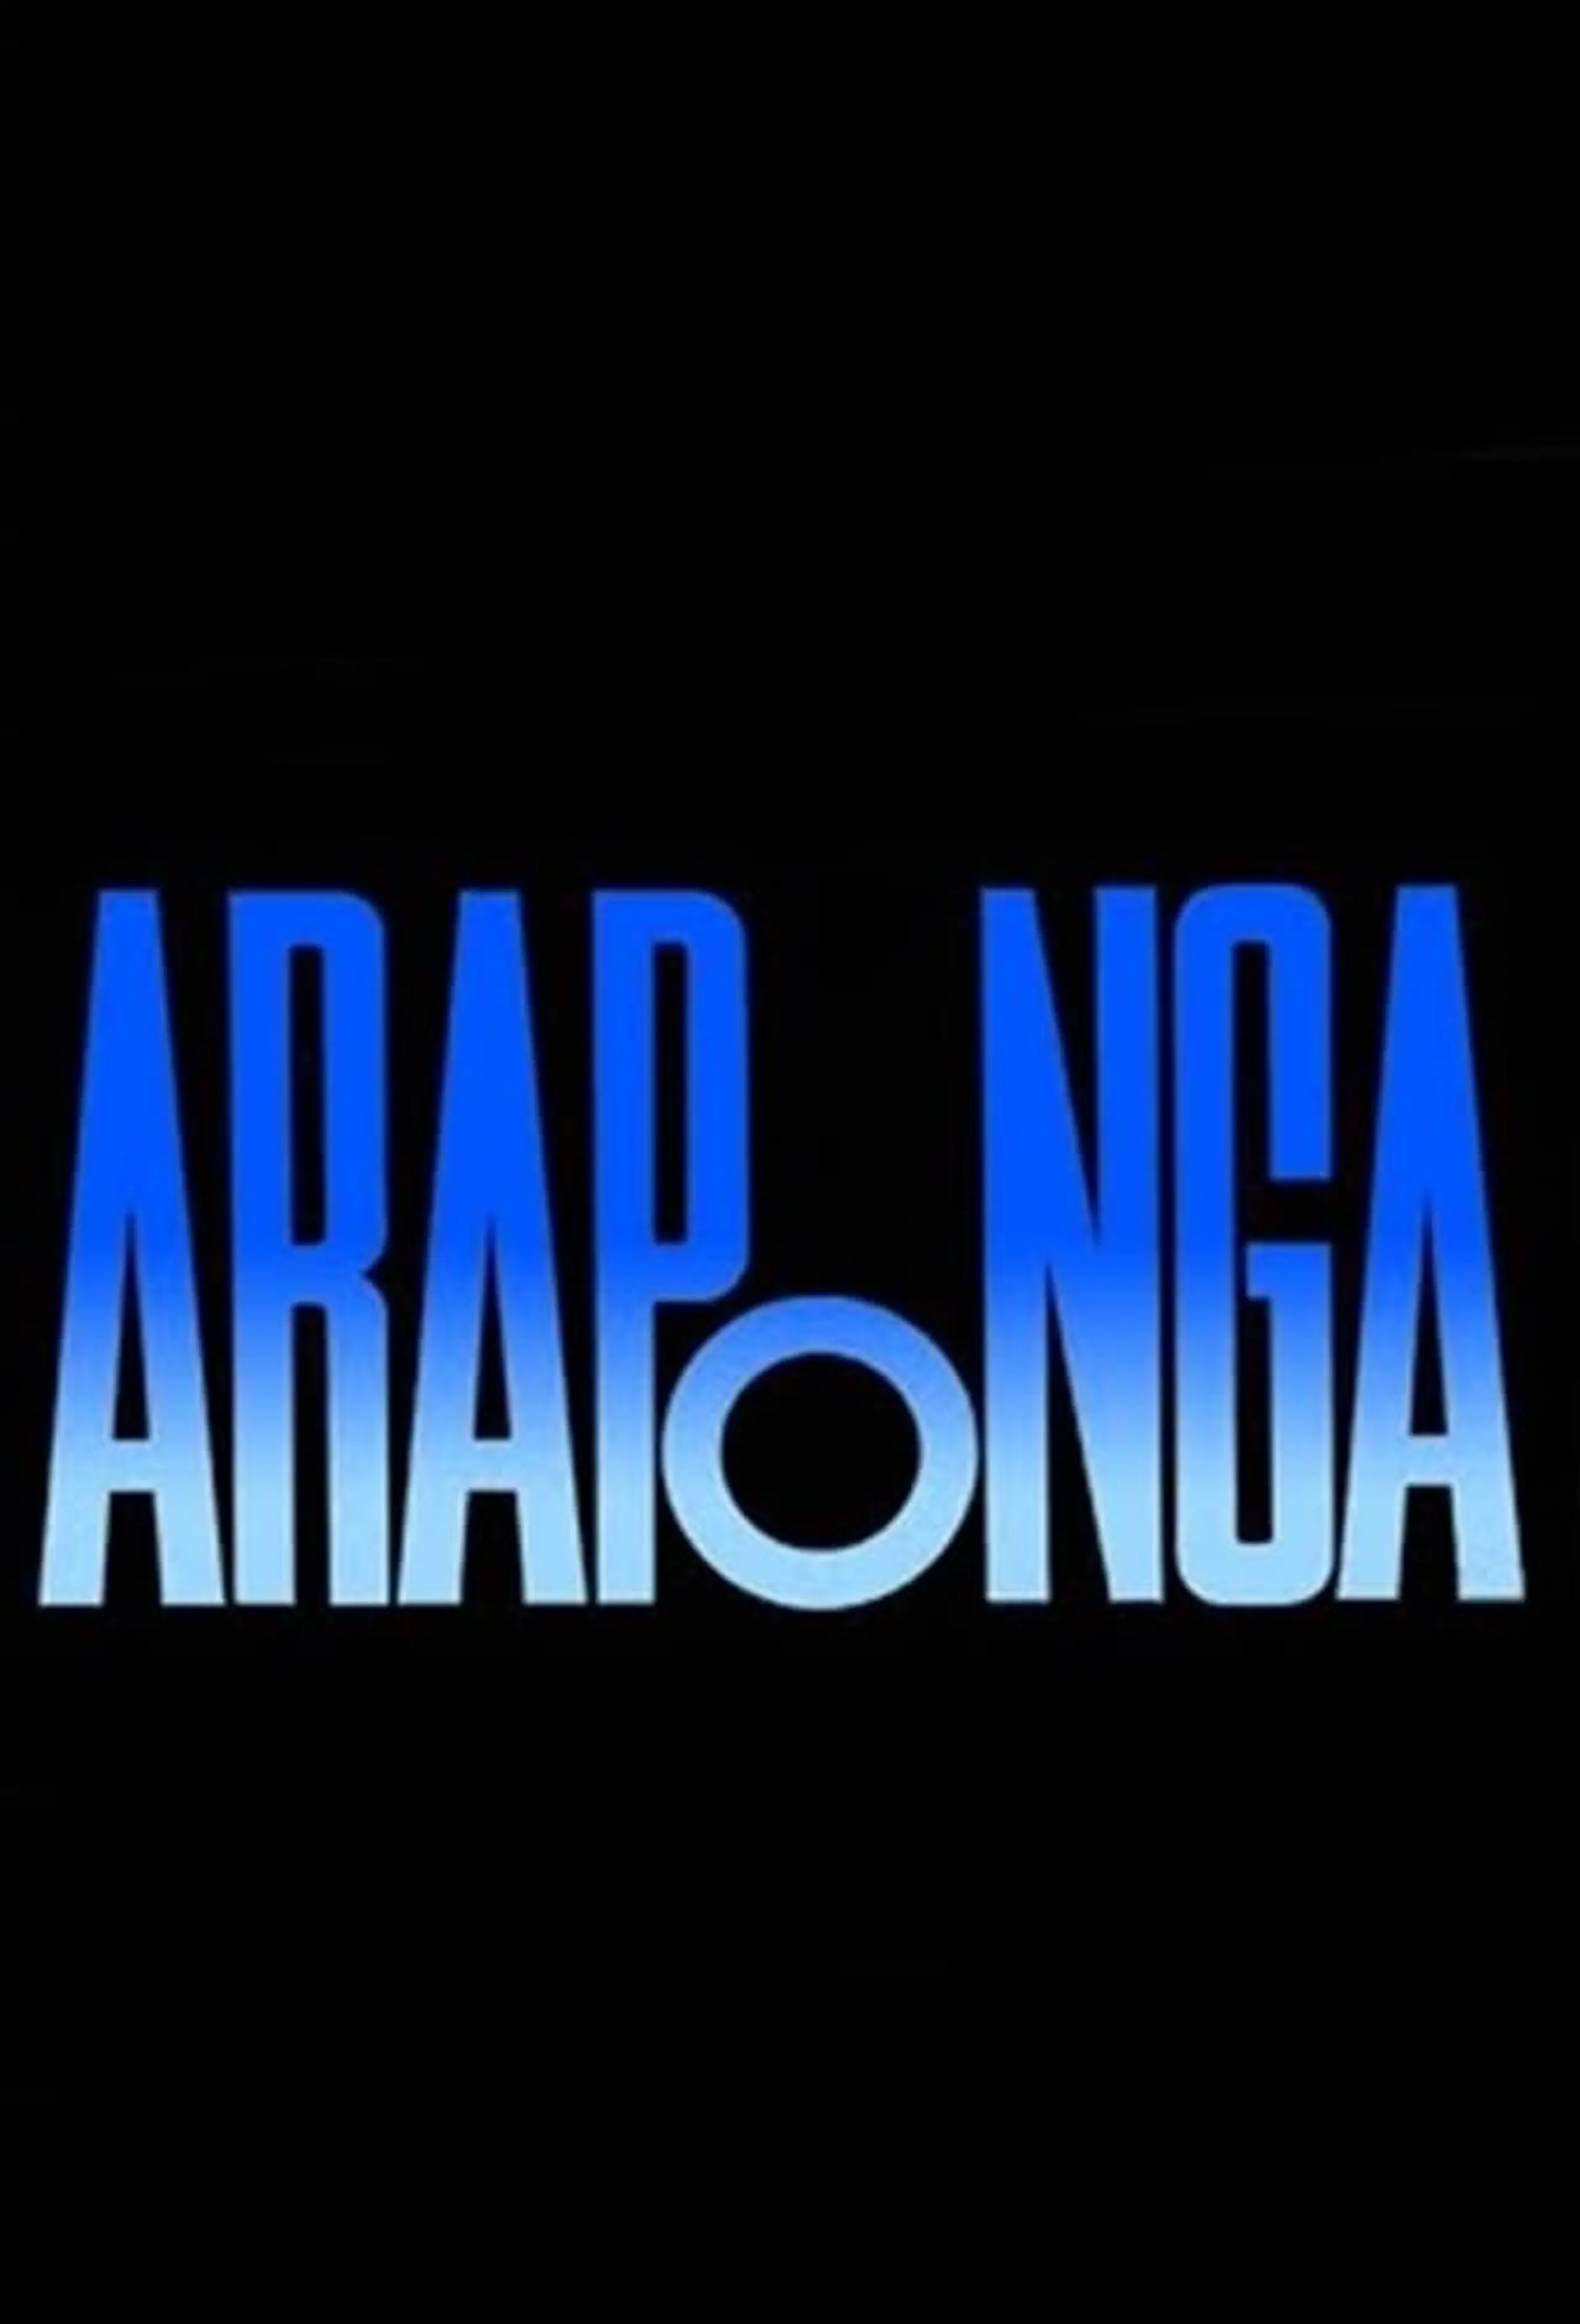 Araponga